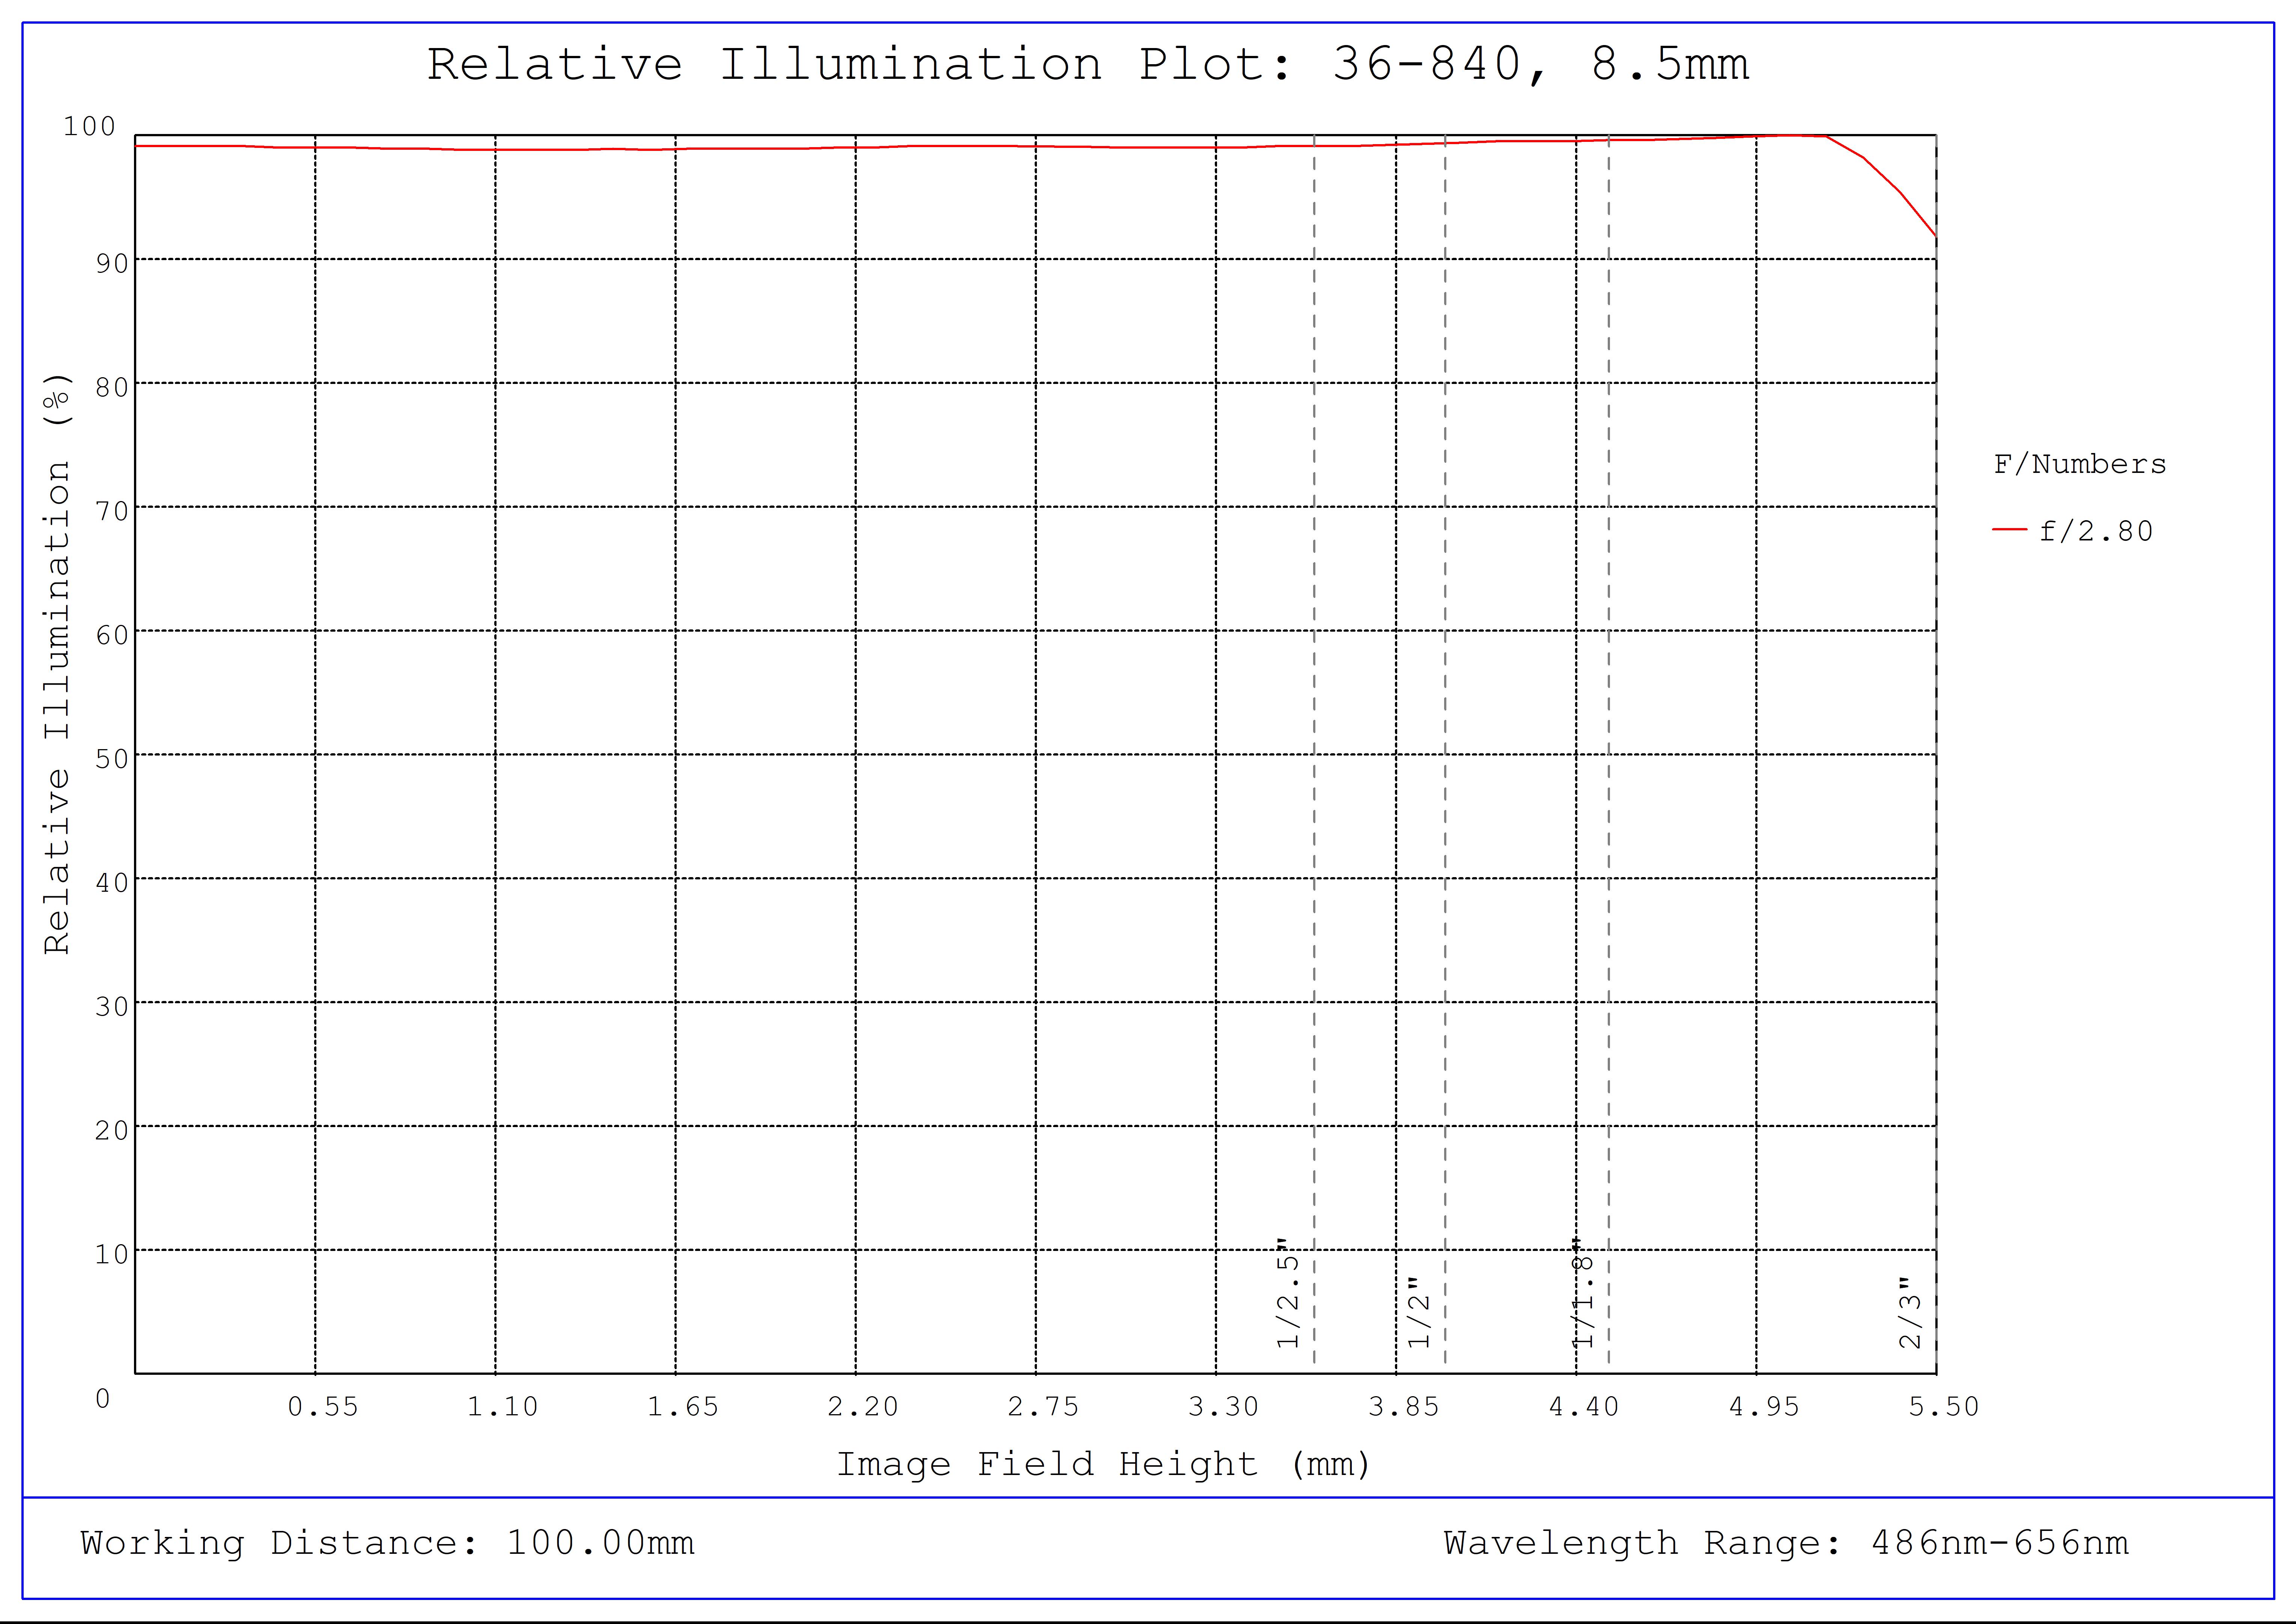 #36-840, 8.5mm, f/2.8 Cr Series Fixed Focal Length Lens, Relative Illumination Plot